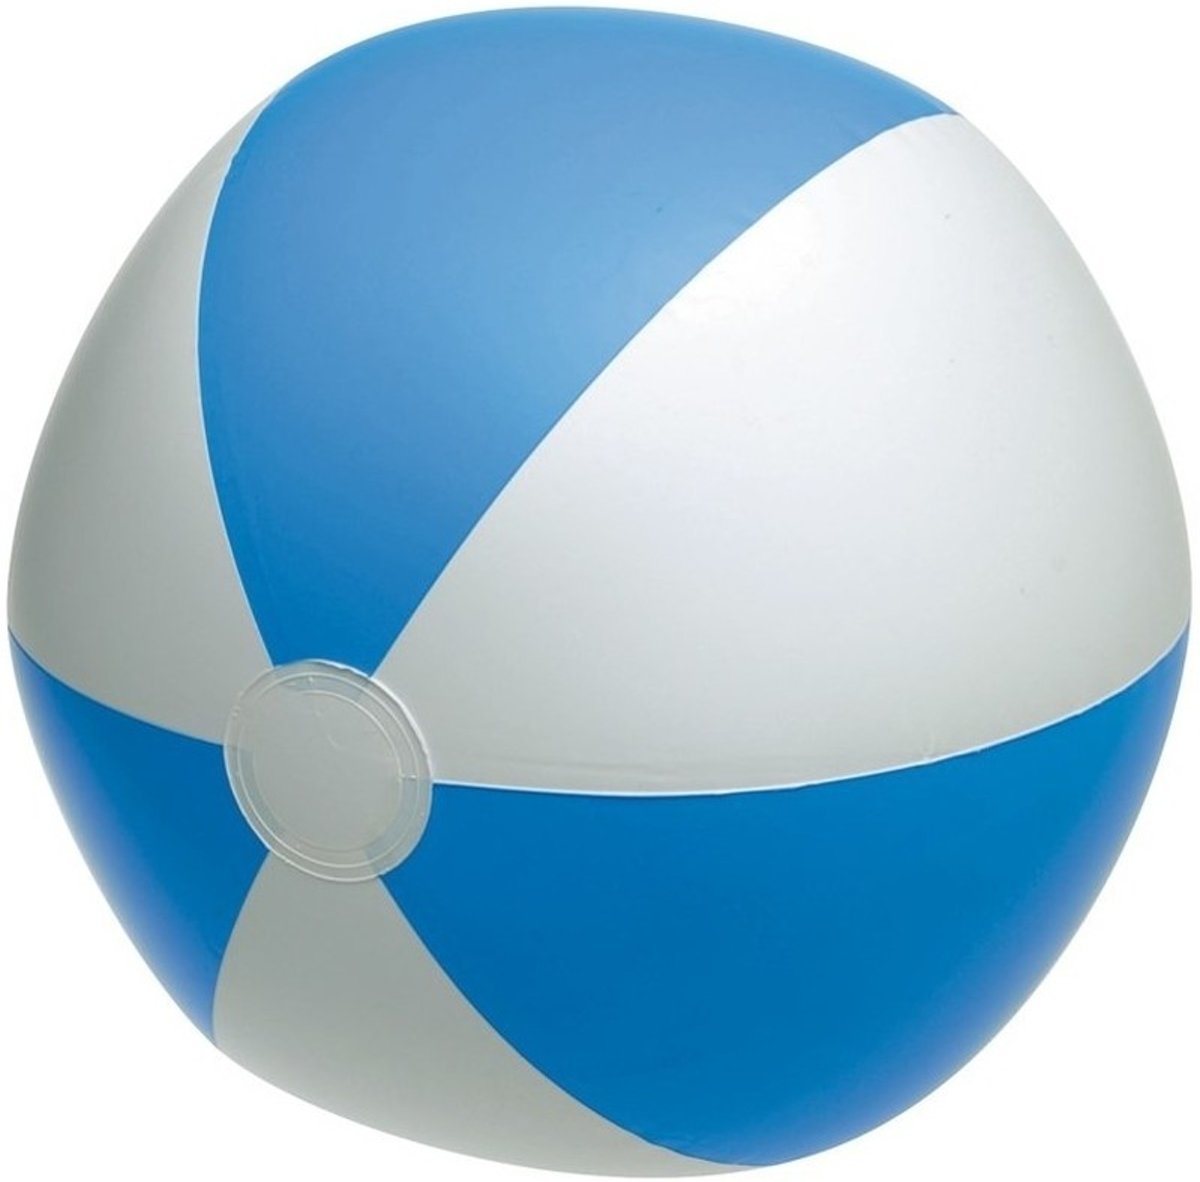 Opblaasbare speelgoed strandbal blauw/wit 28 cm - Strandballen - Buiten speelgoed - Strand speelgoed